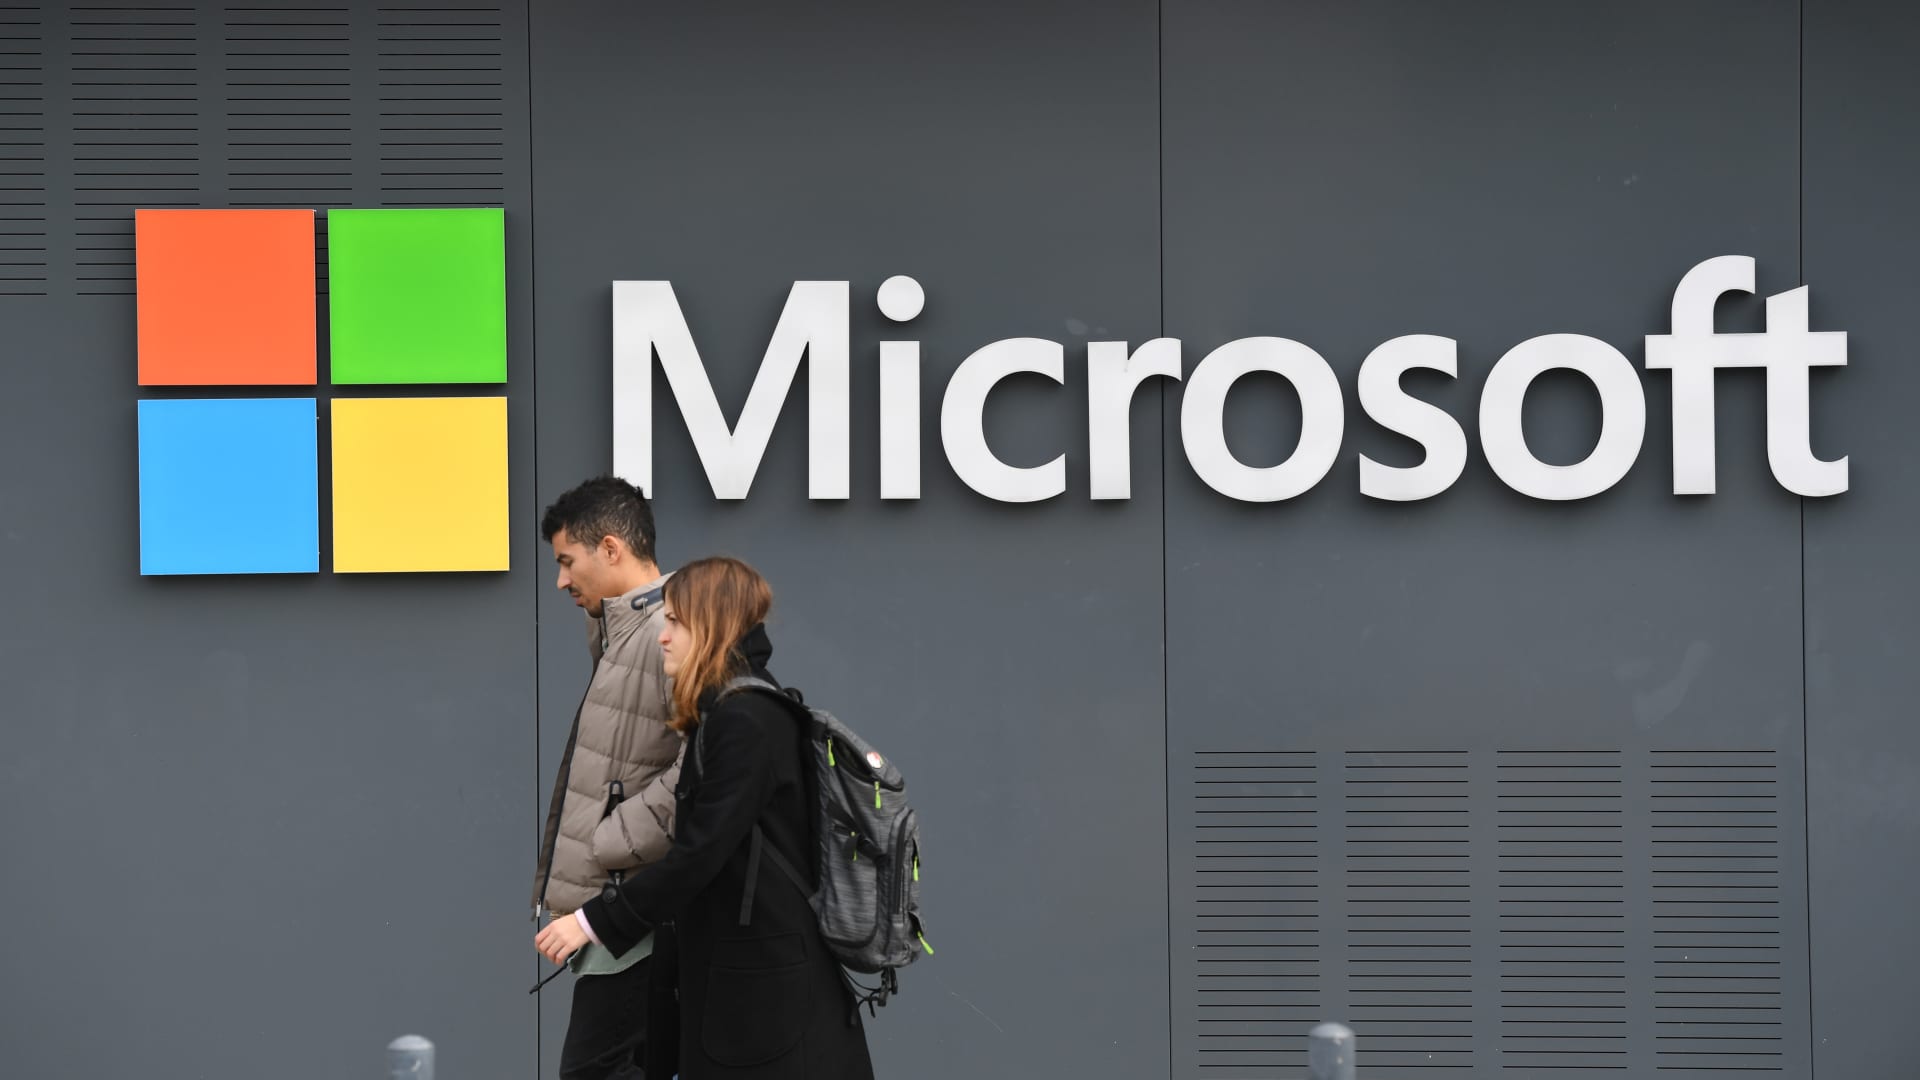 Microsoft stock rallies on earnings and bullish A.I. outlook